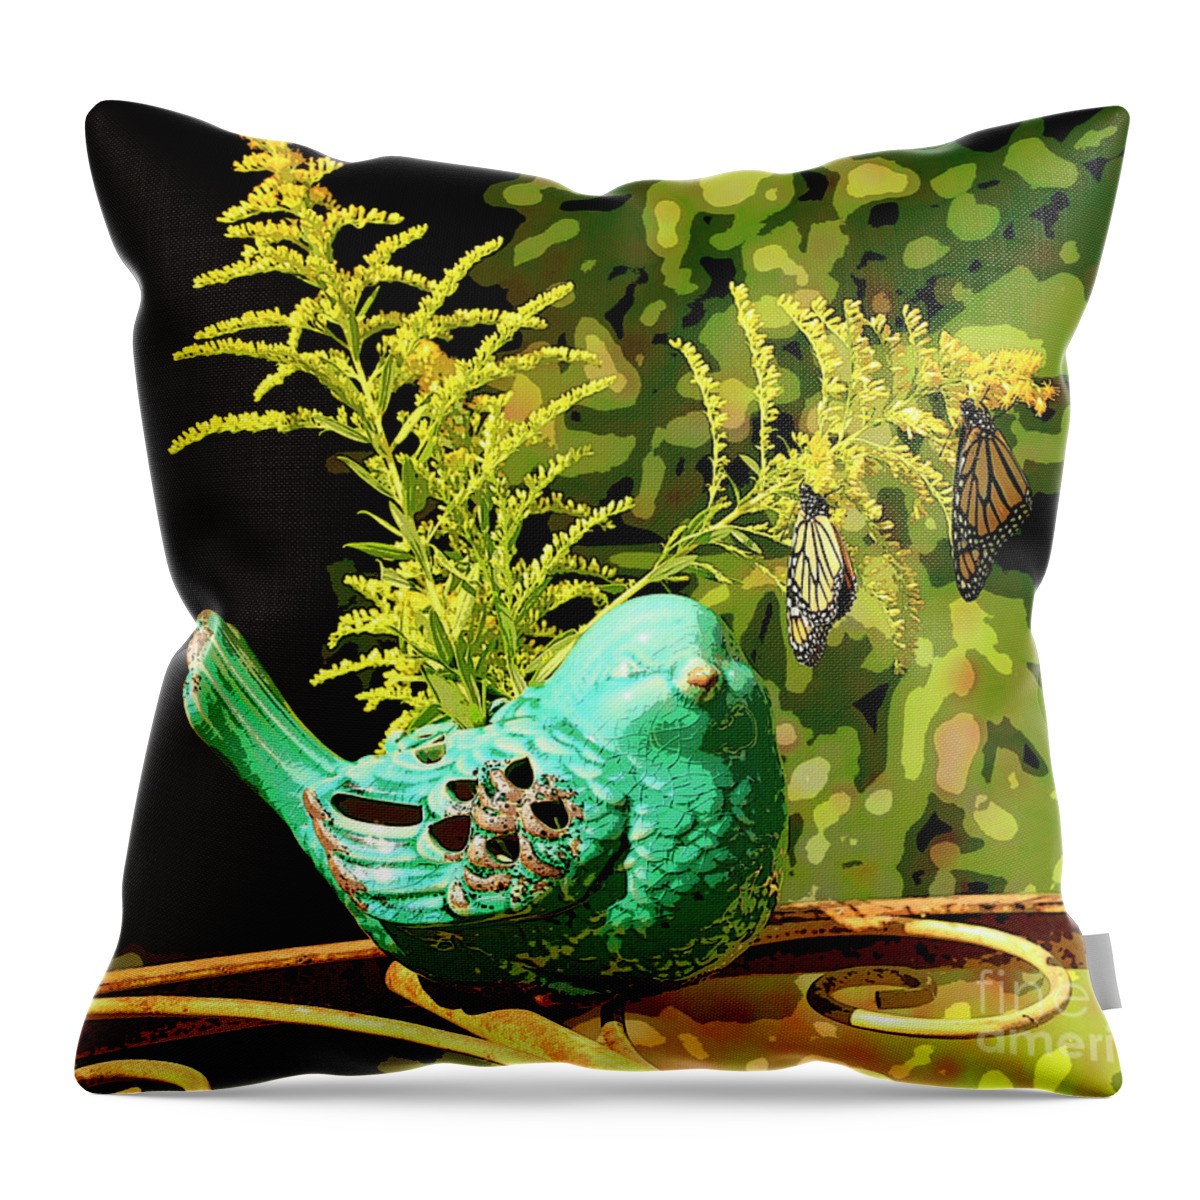 Teal Ceramic Bird Throw Pillow featuring the photograph Artistic Teal Bird And Butterflies by Luana K Perez